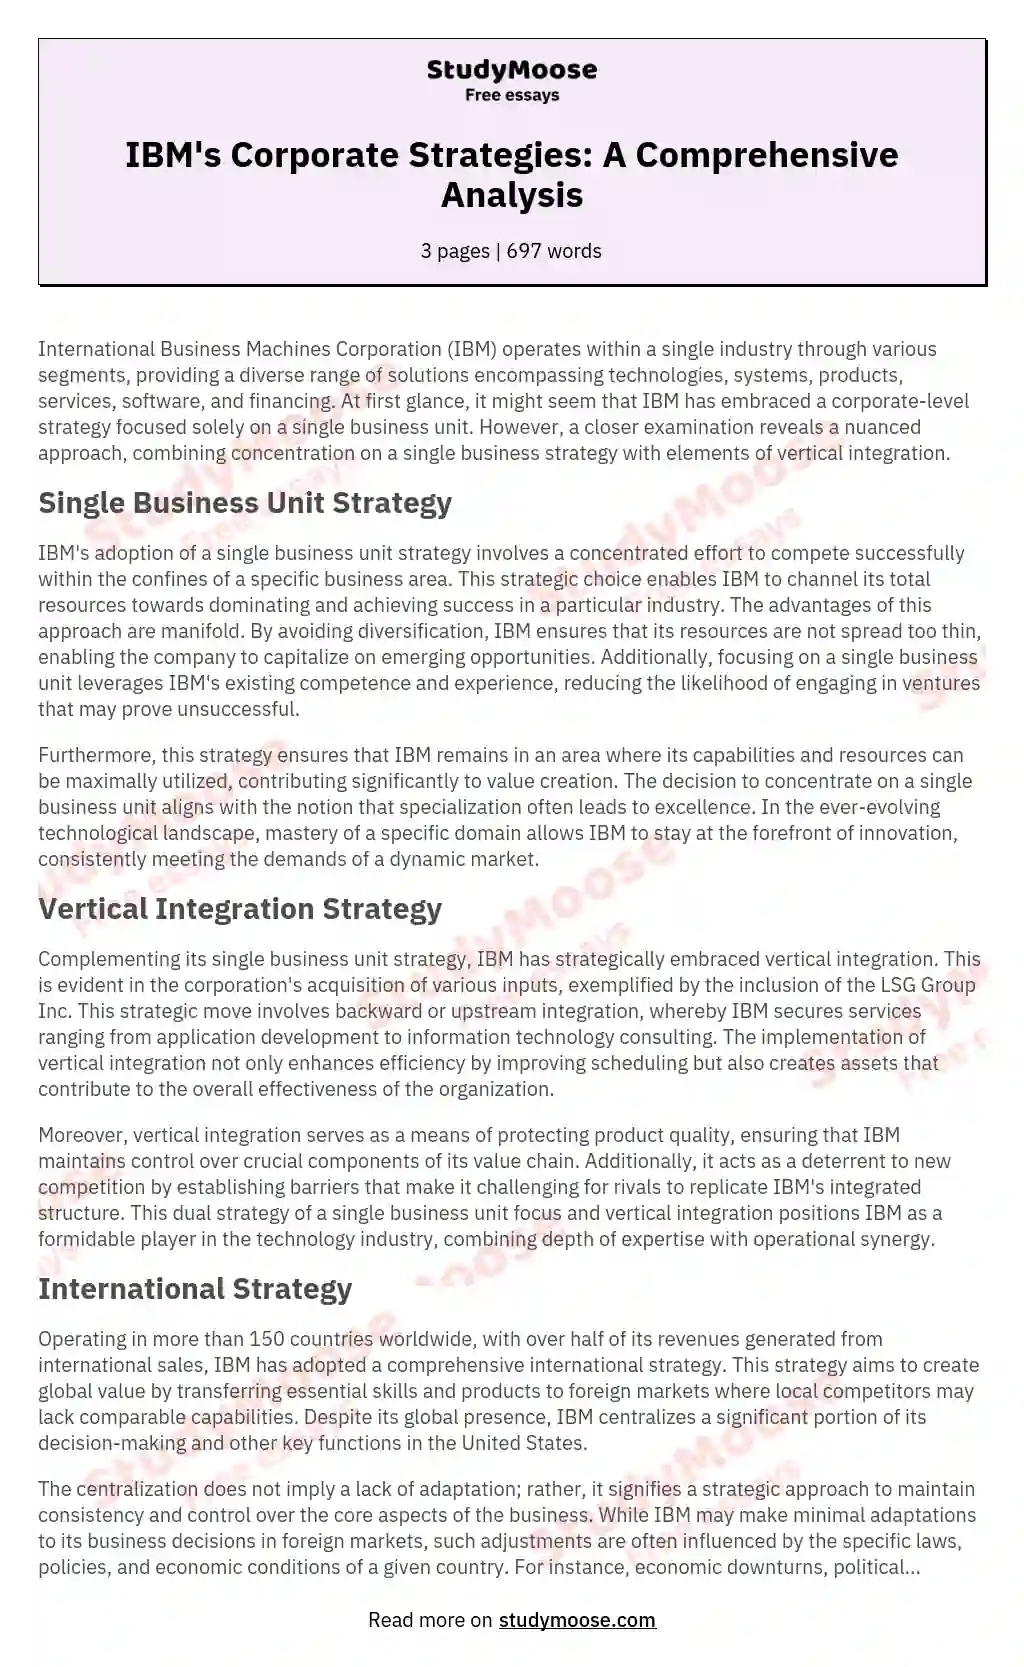 IBM's Corporate Strategies: A Comprehensive Analysis essay